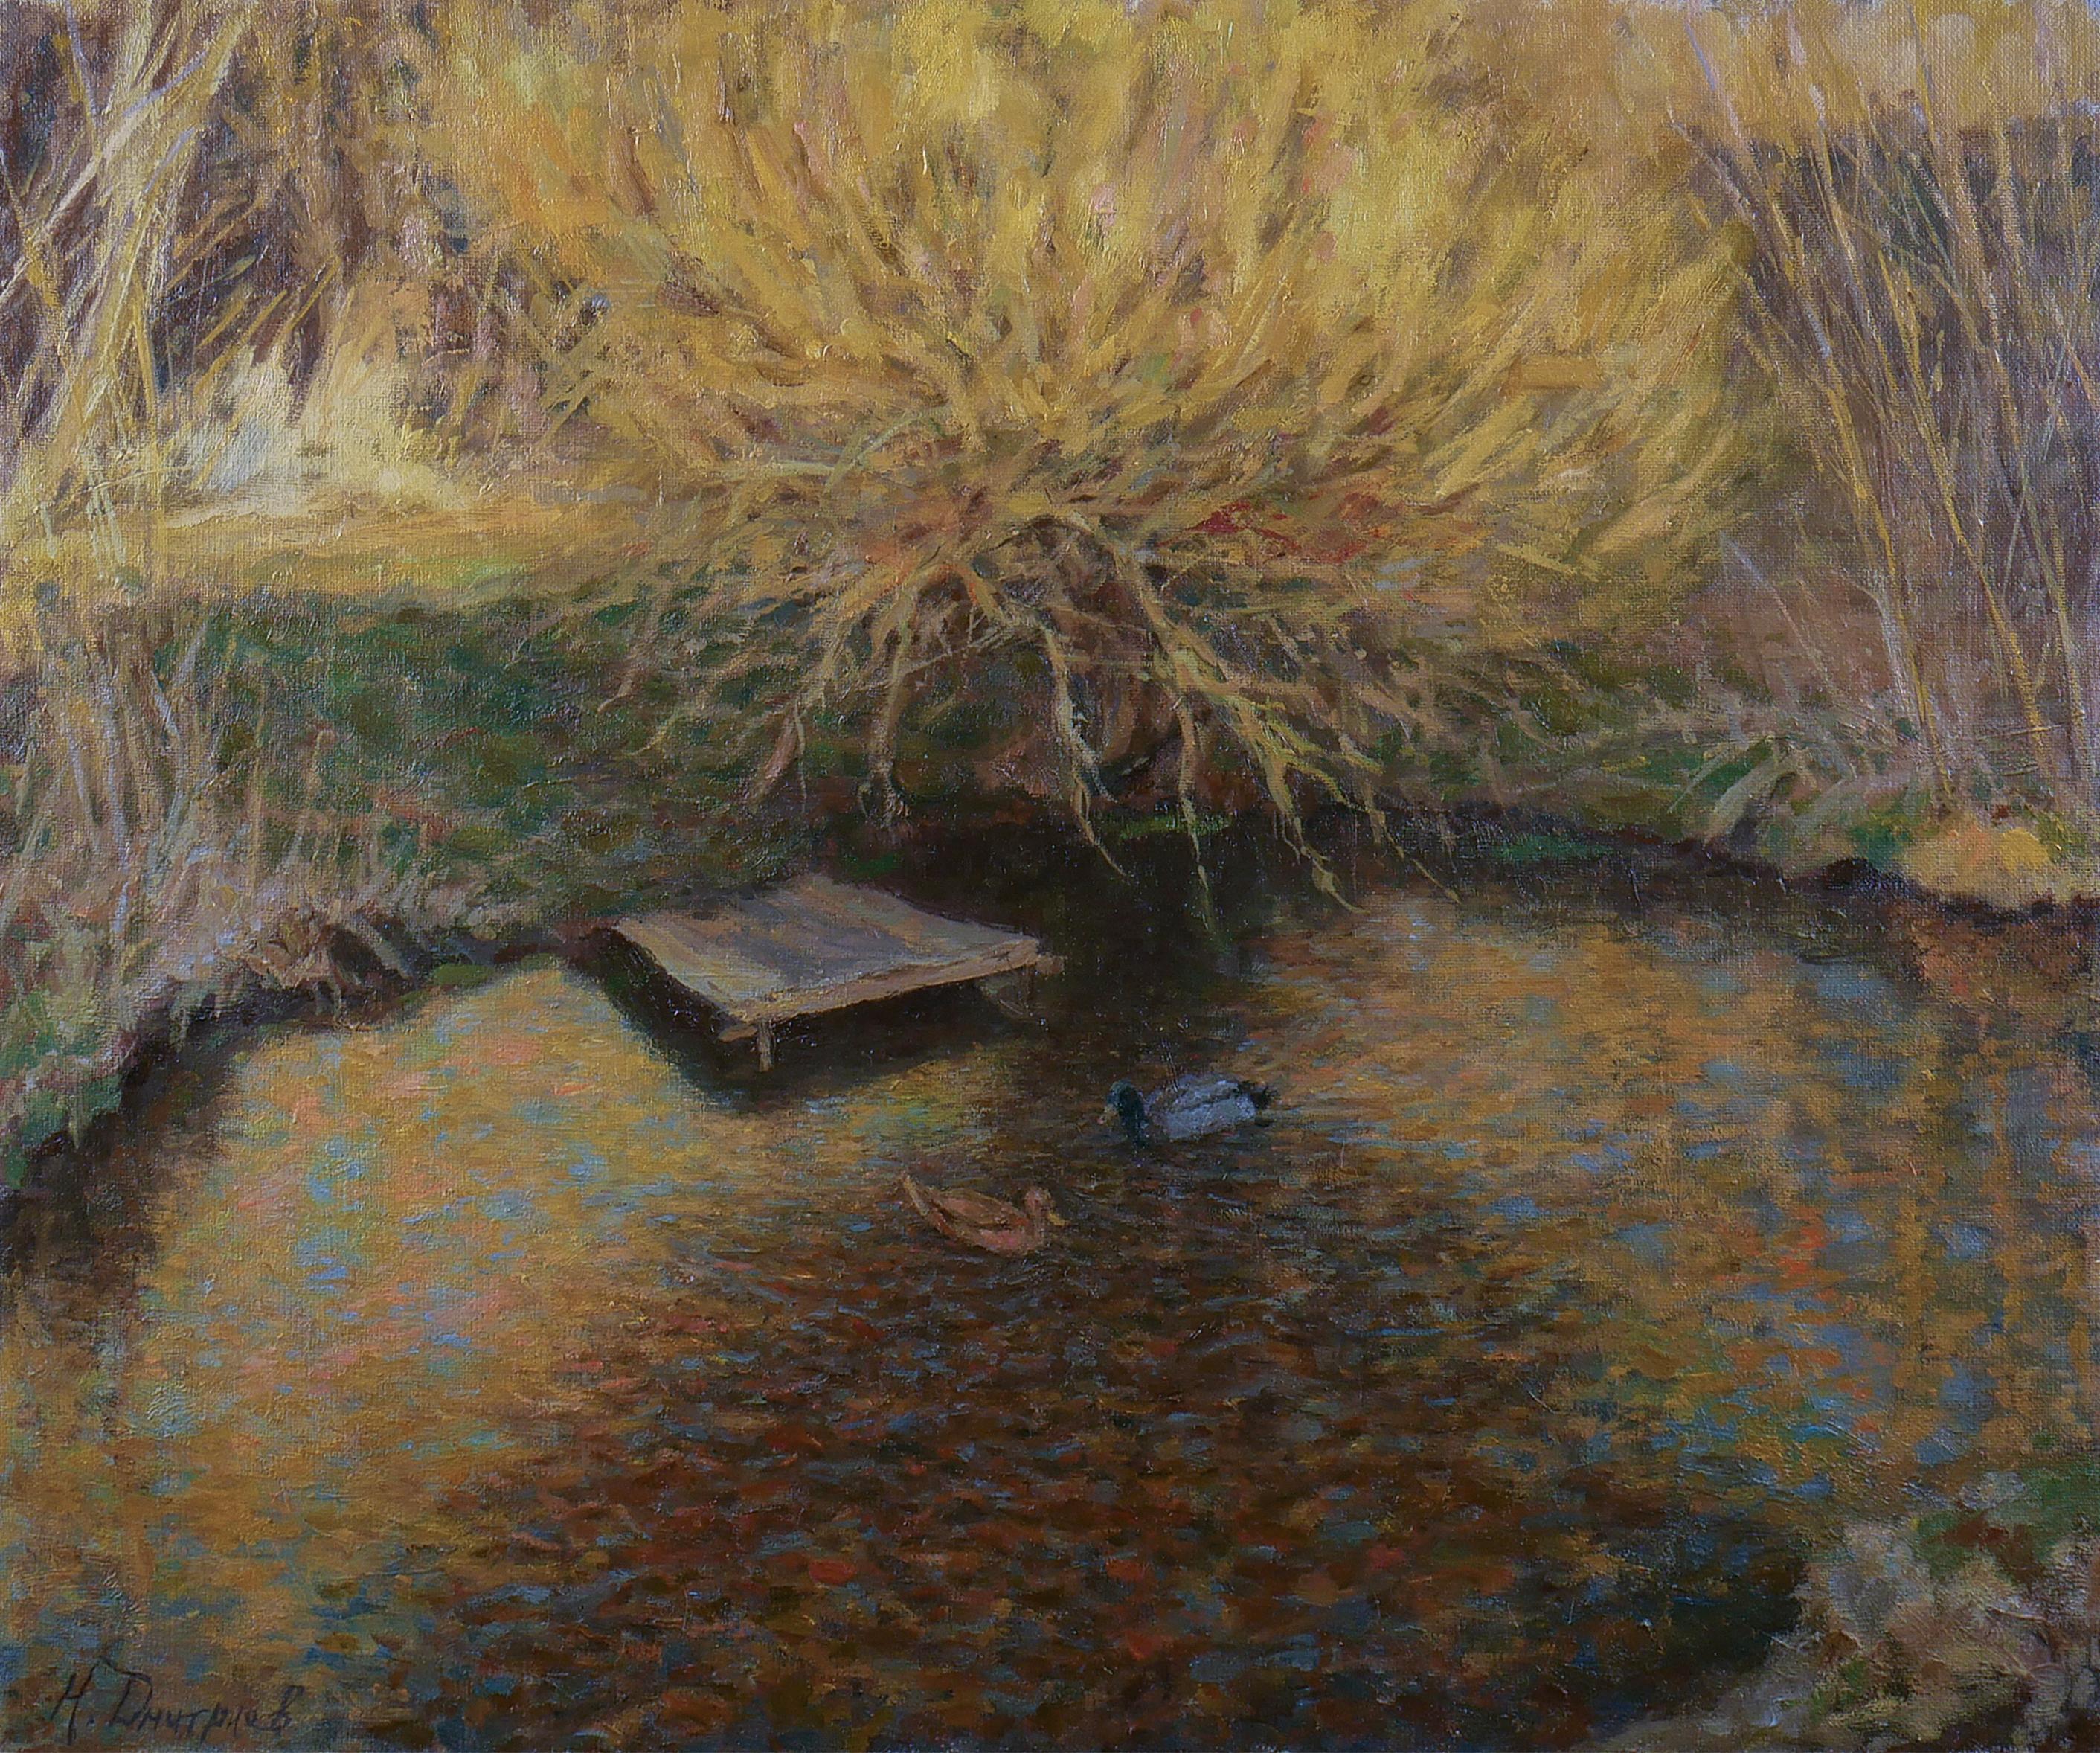 The Golden Evening. Spring River - river landscape painting